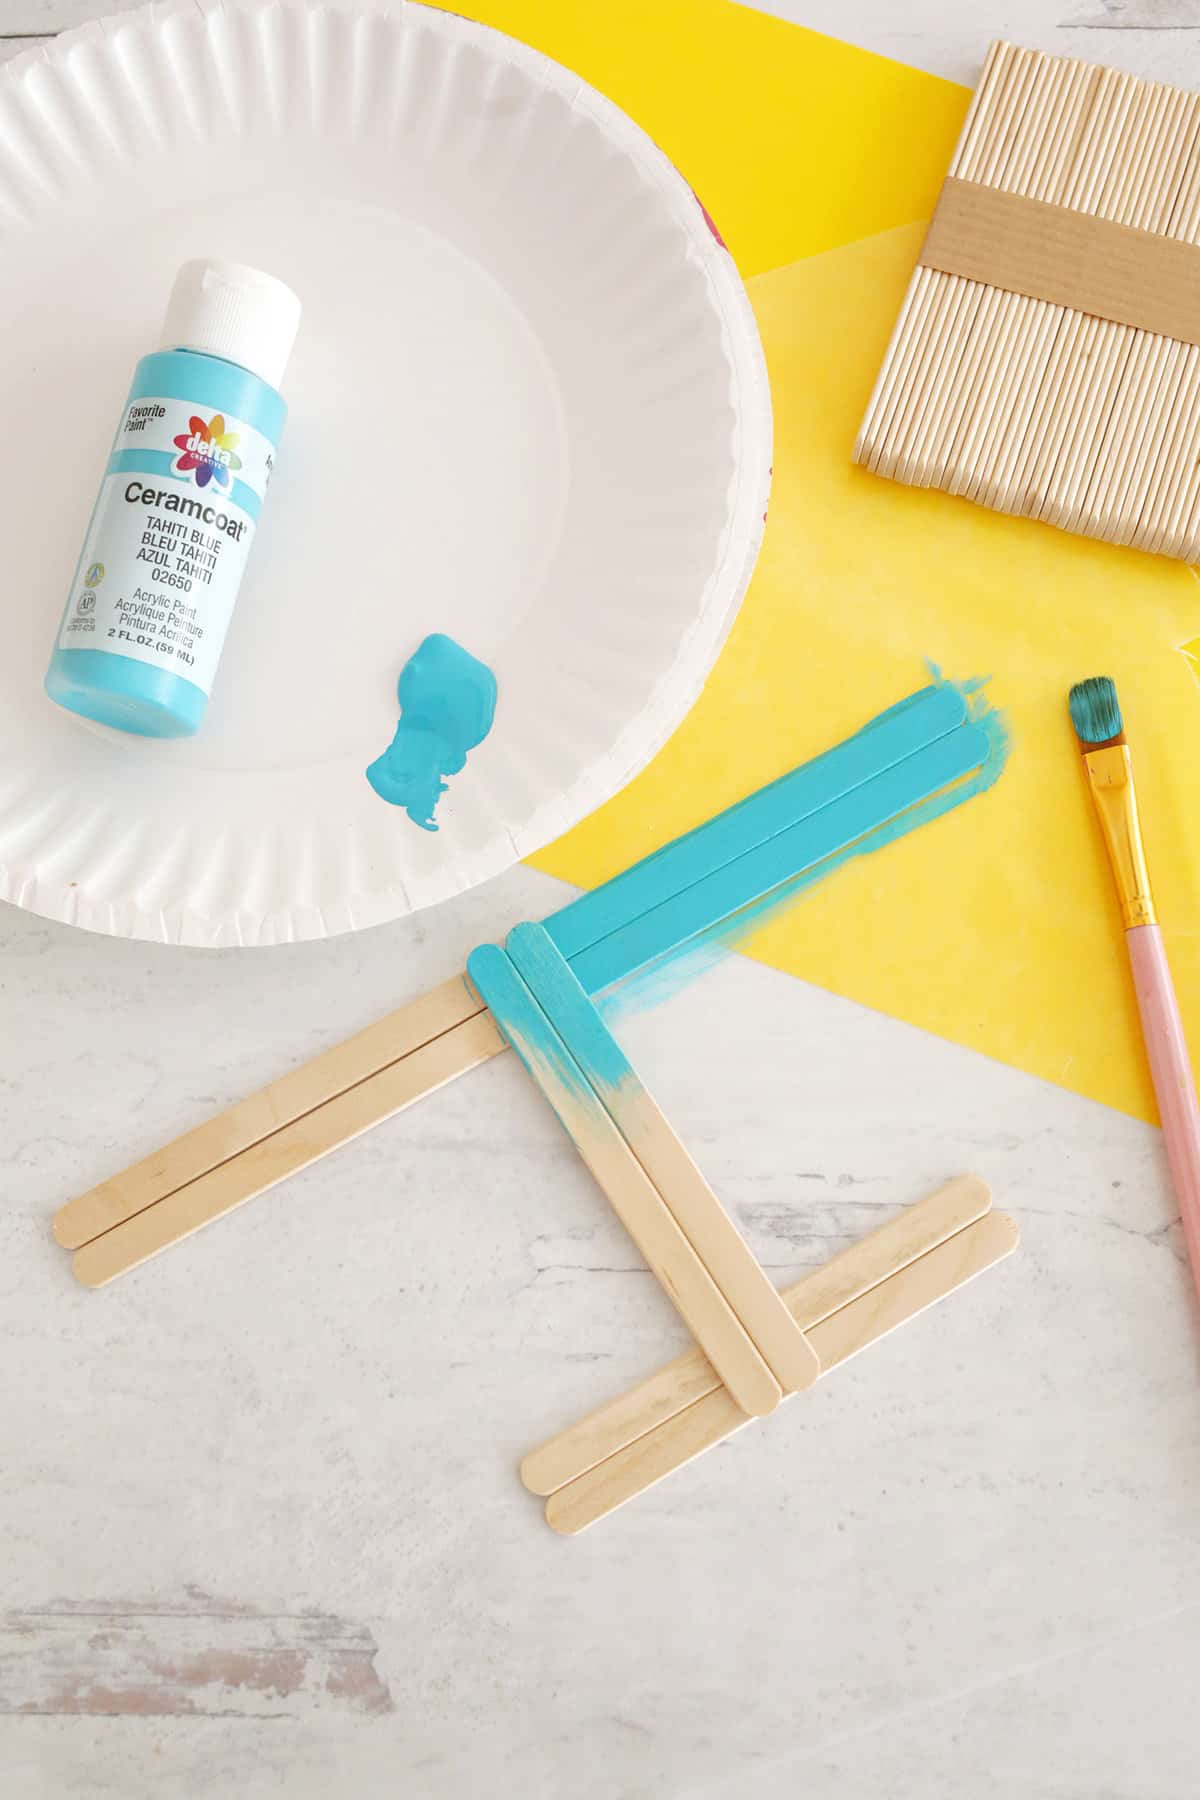 painting base of popsicle stick menorah hanukkah craft for kids